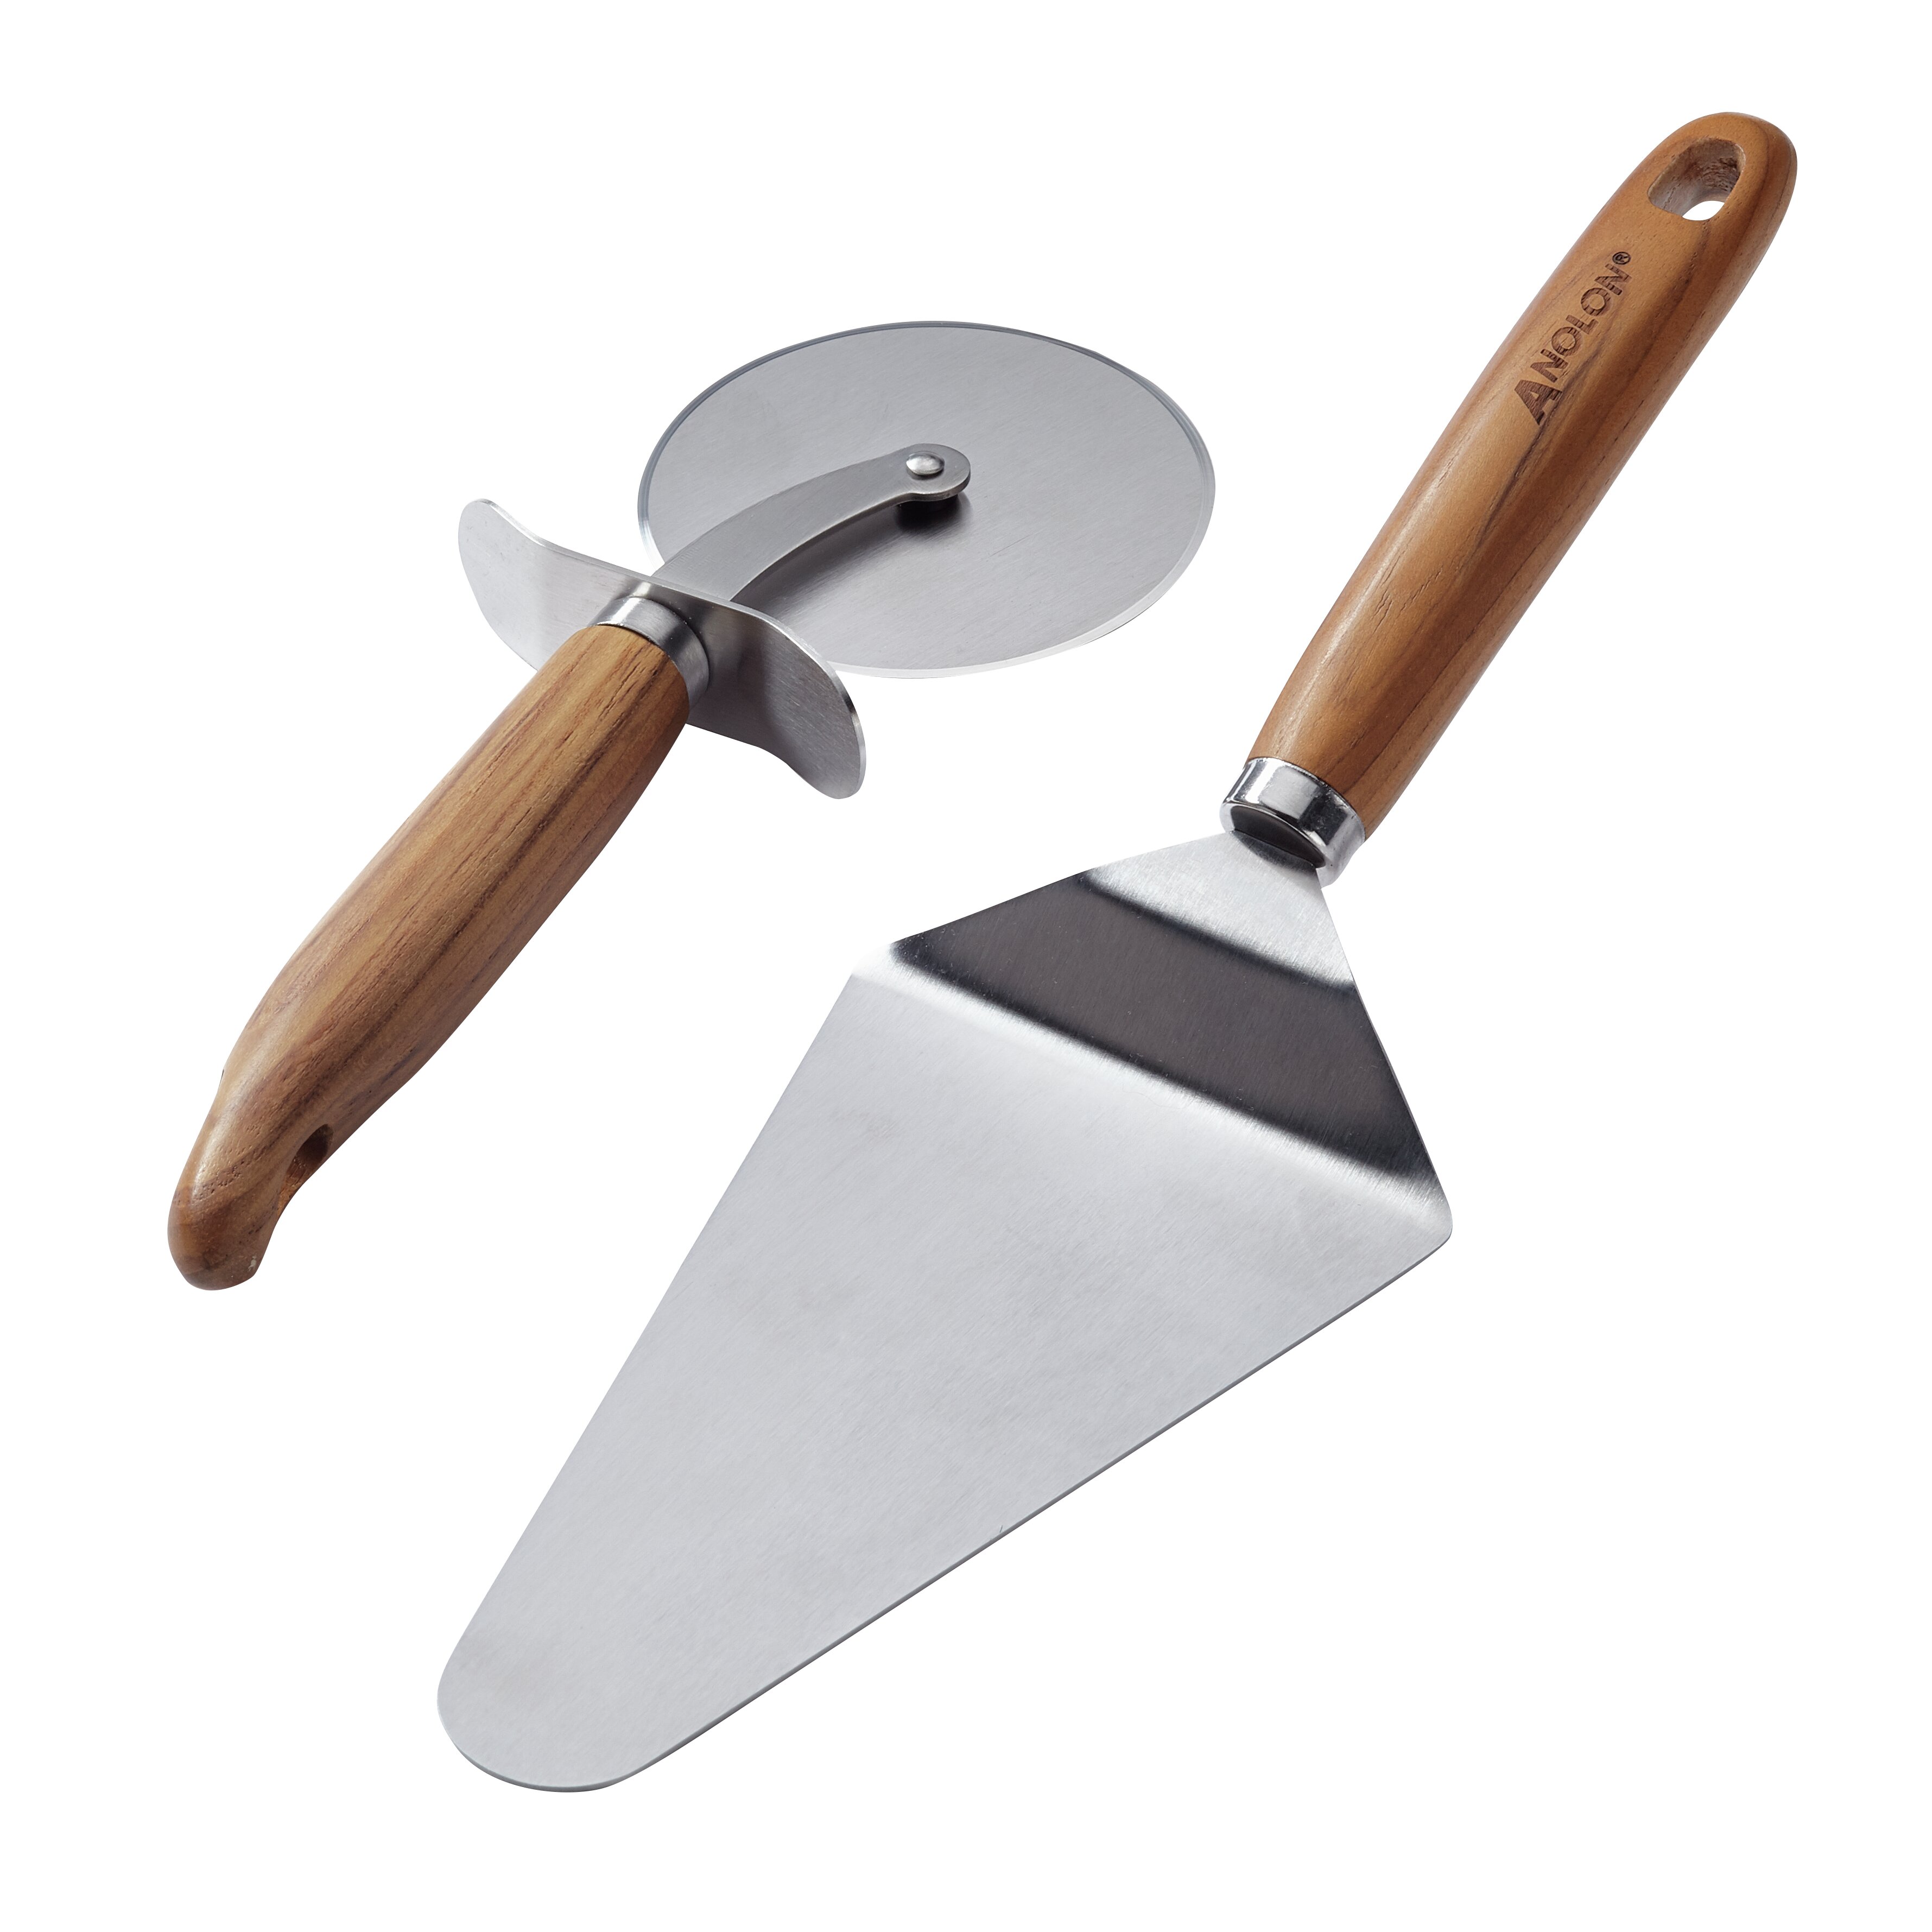 Anolon Tools and Gadgets SureGrip Nonstick Kitchen Utensil Set, 6-Piece &  Reviews